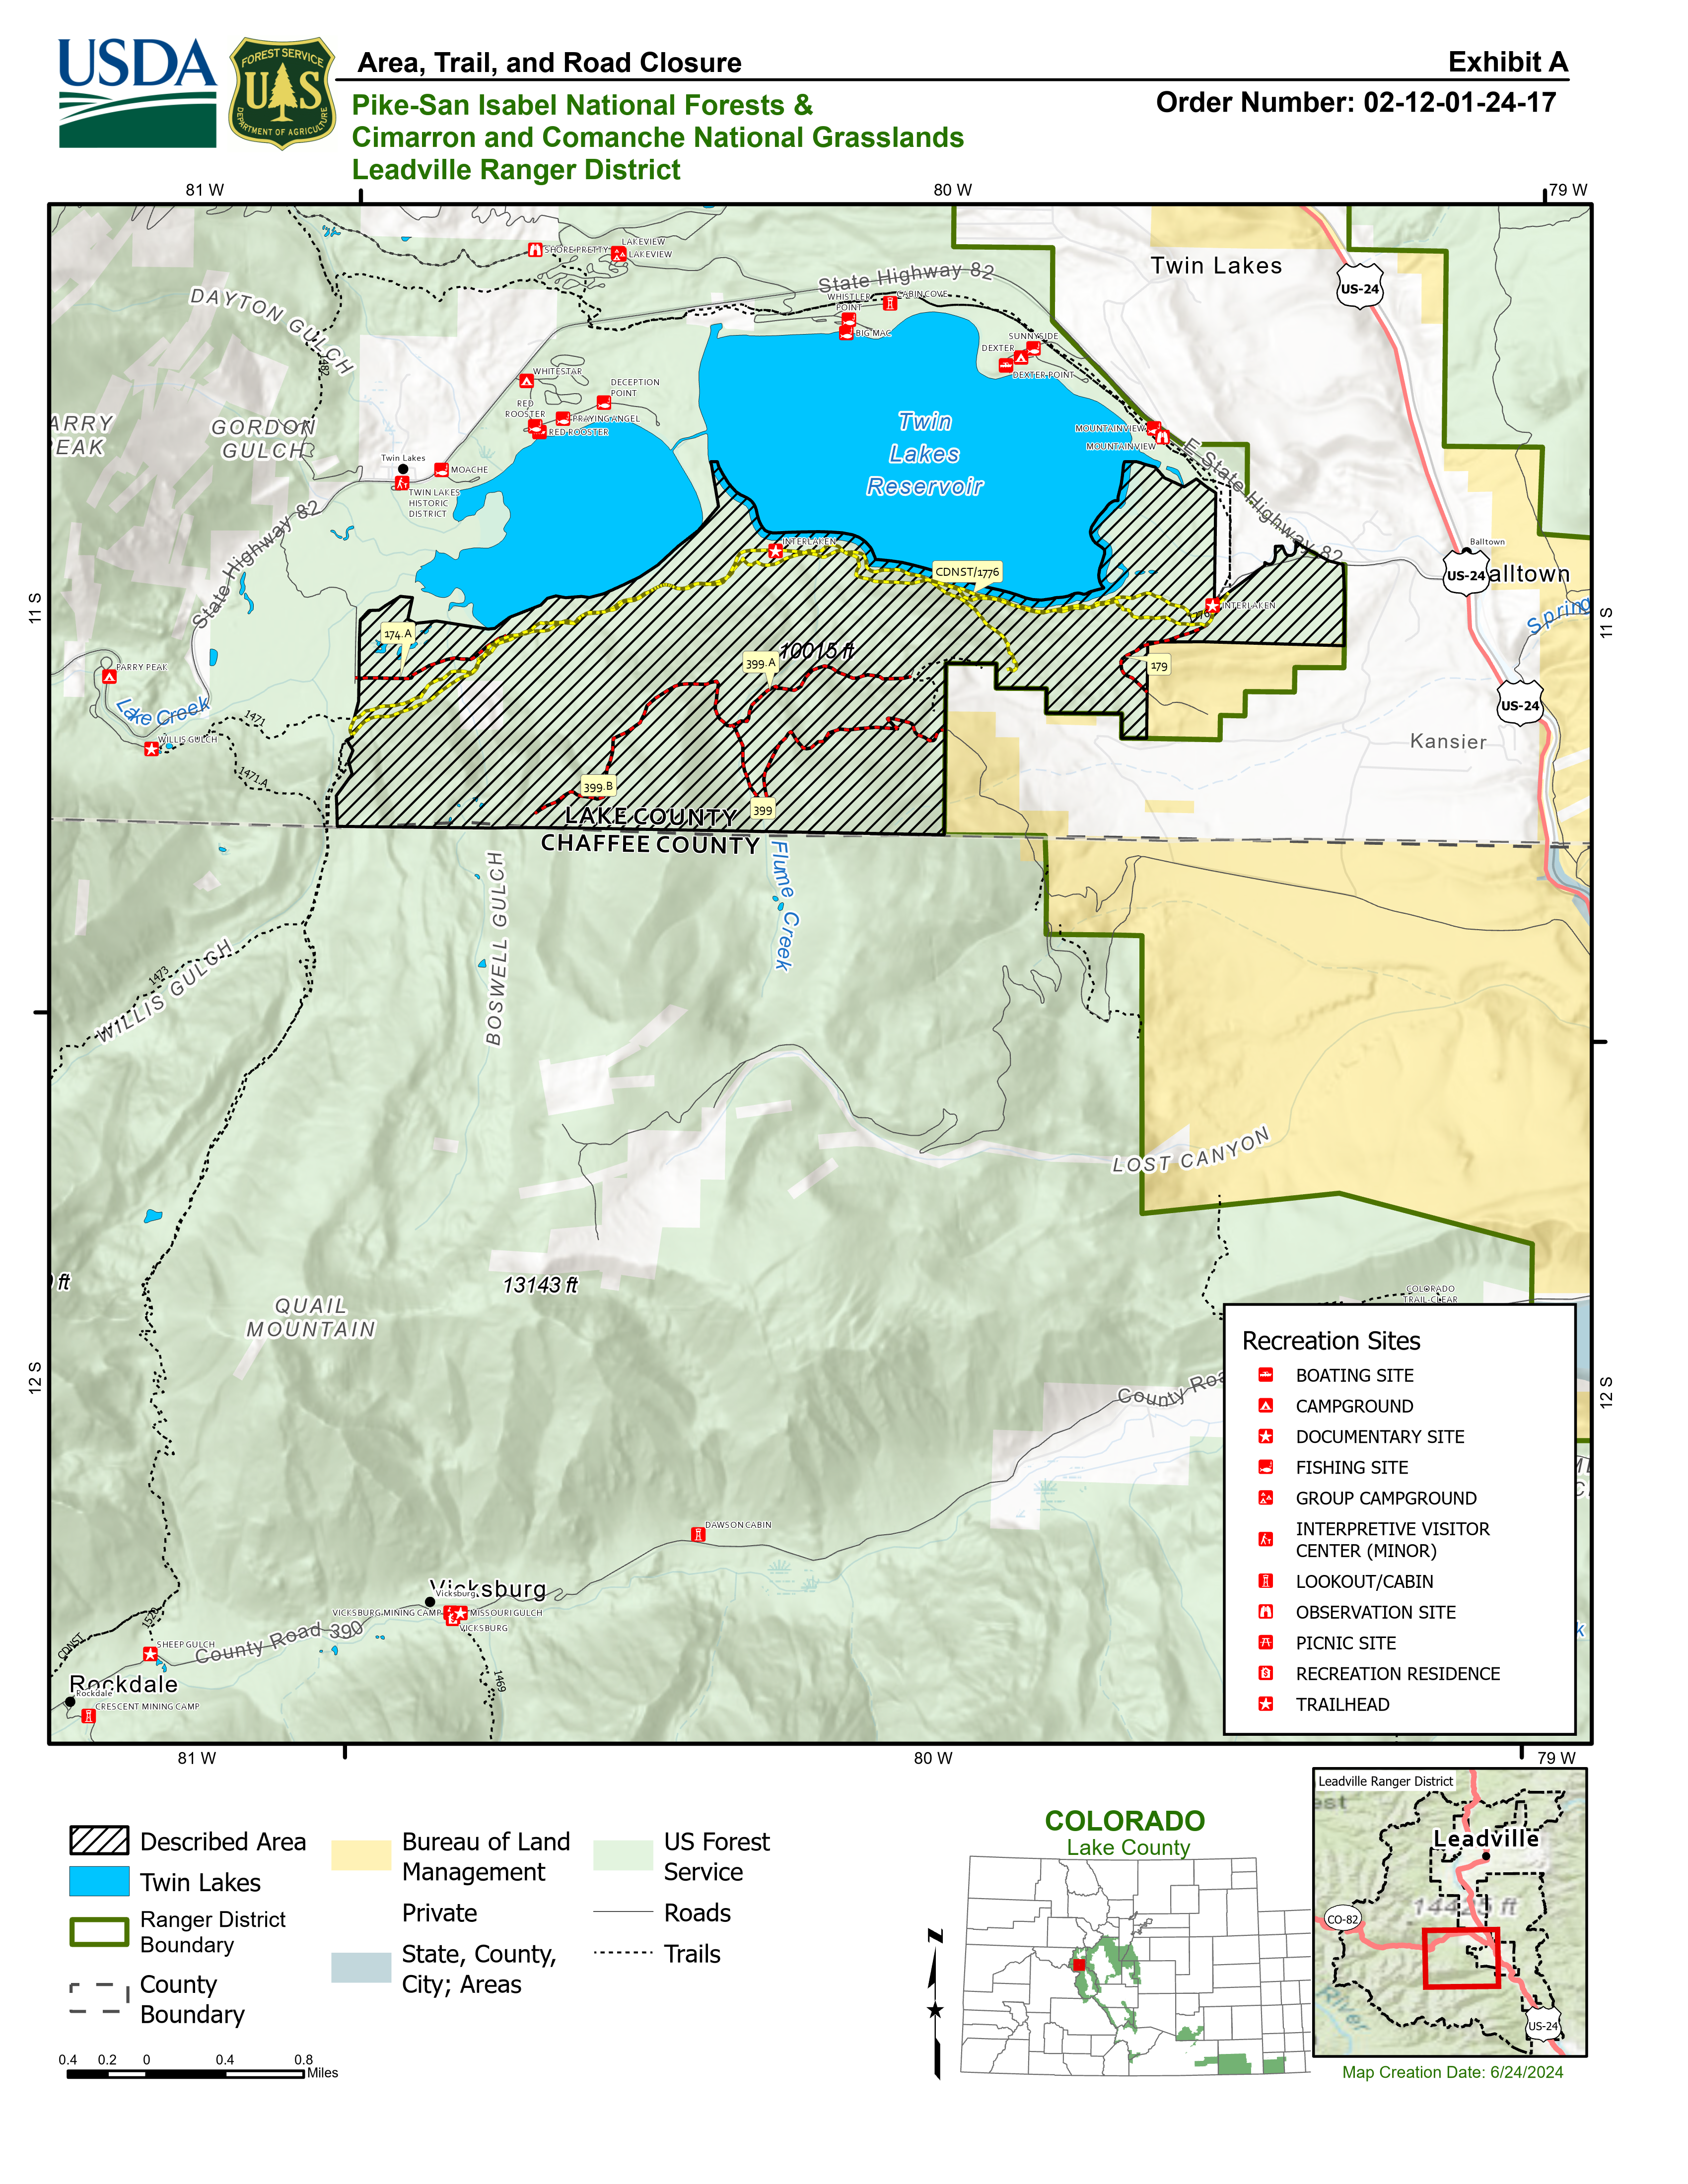 

						US Forest Service Leadville Ranger District Closure Order 02-12-01-24-17
			